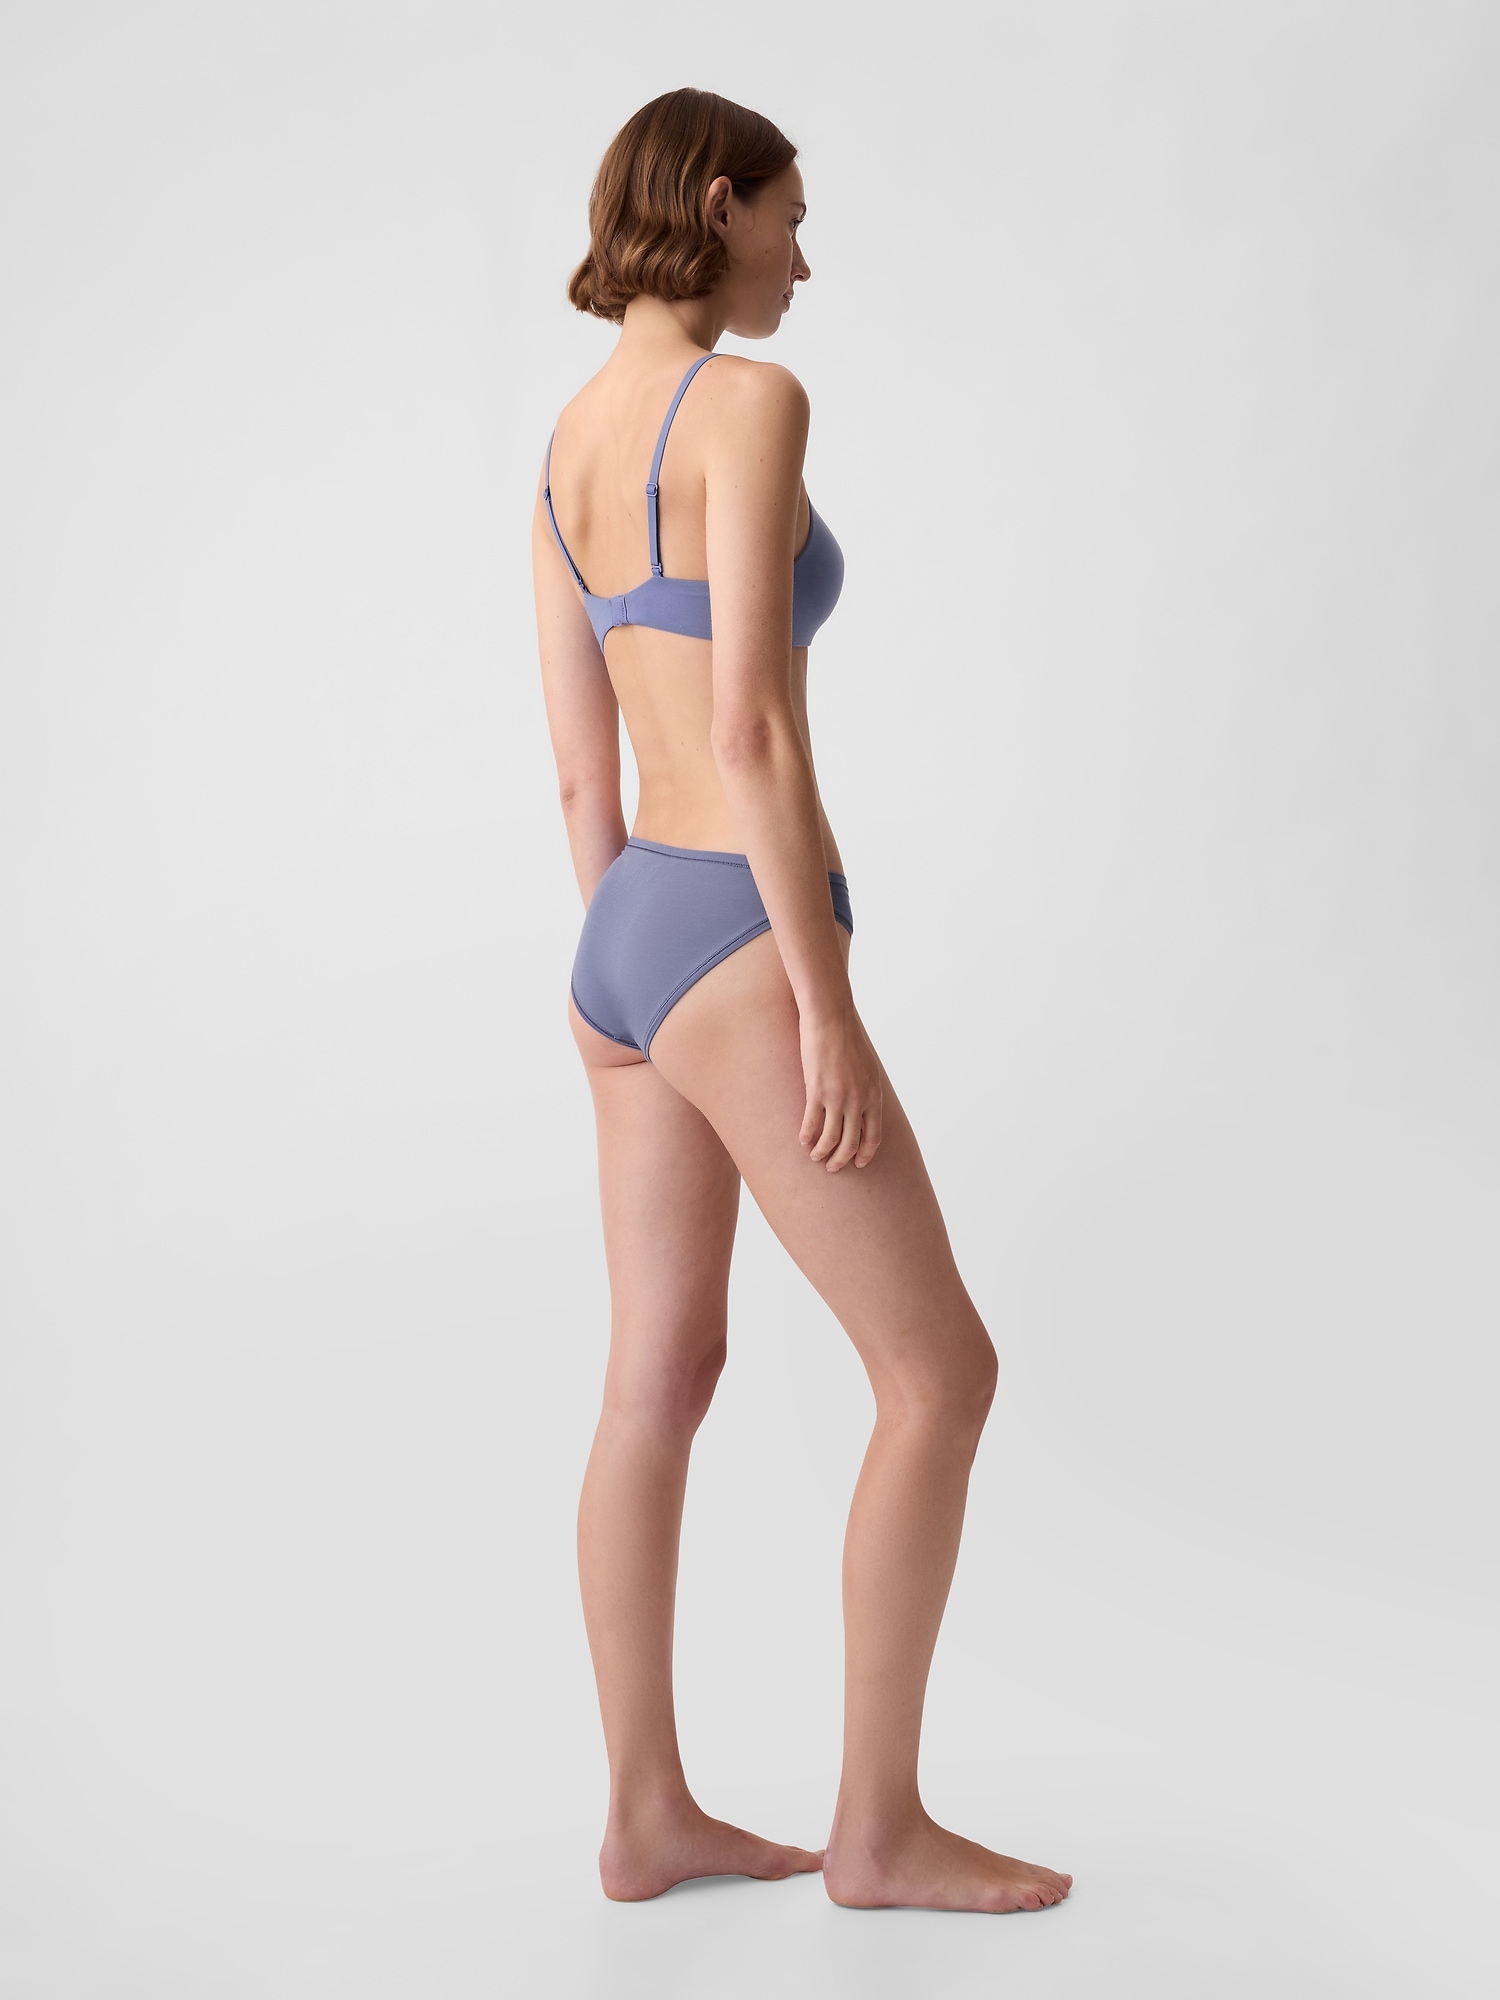 Gap Body Black Breathe Bikini Underwear 2 Pack Women’s Medium NWOT